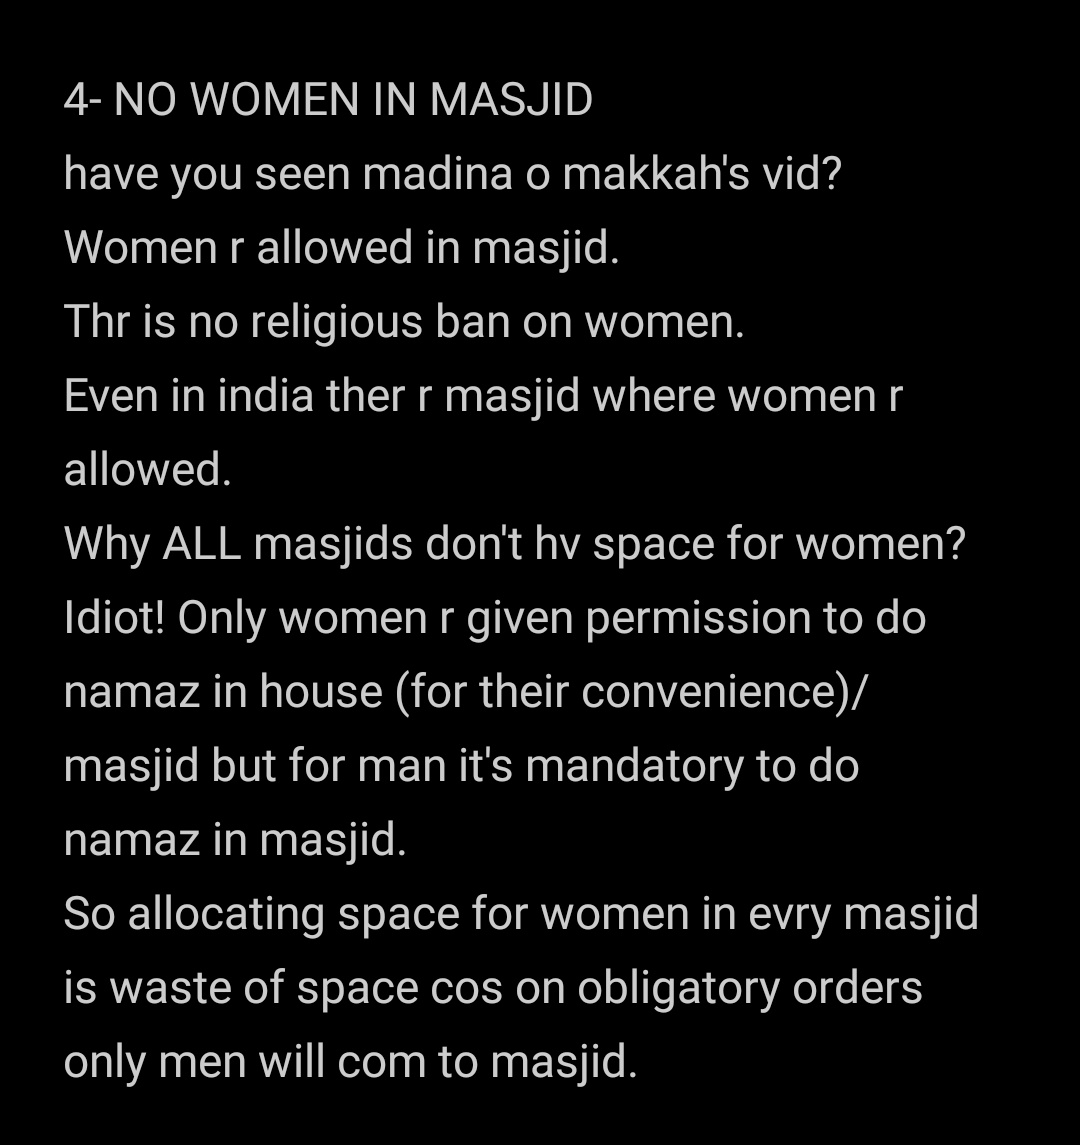 4) BAN ON WOMEN'S ENTRY IN MASJID